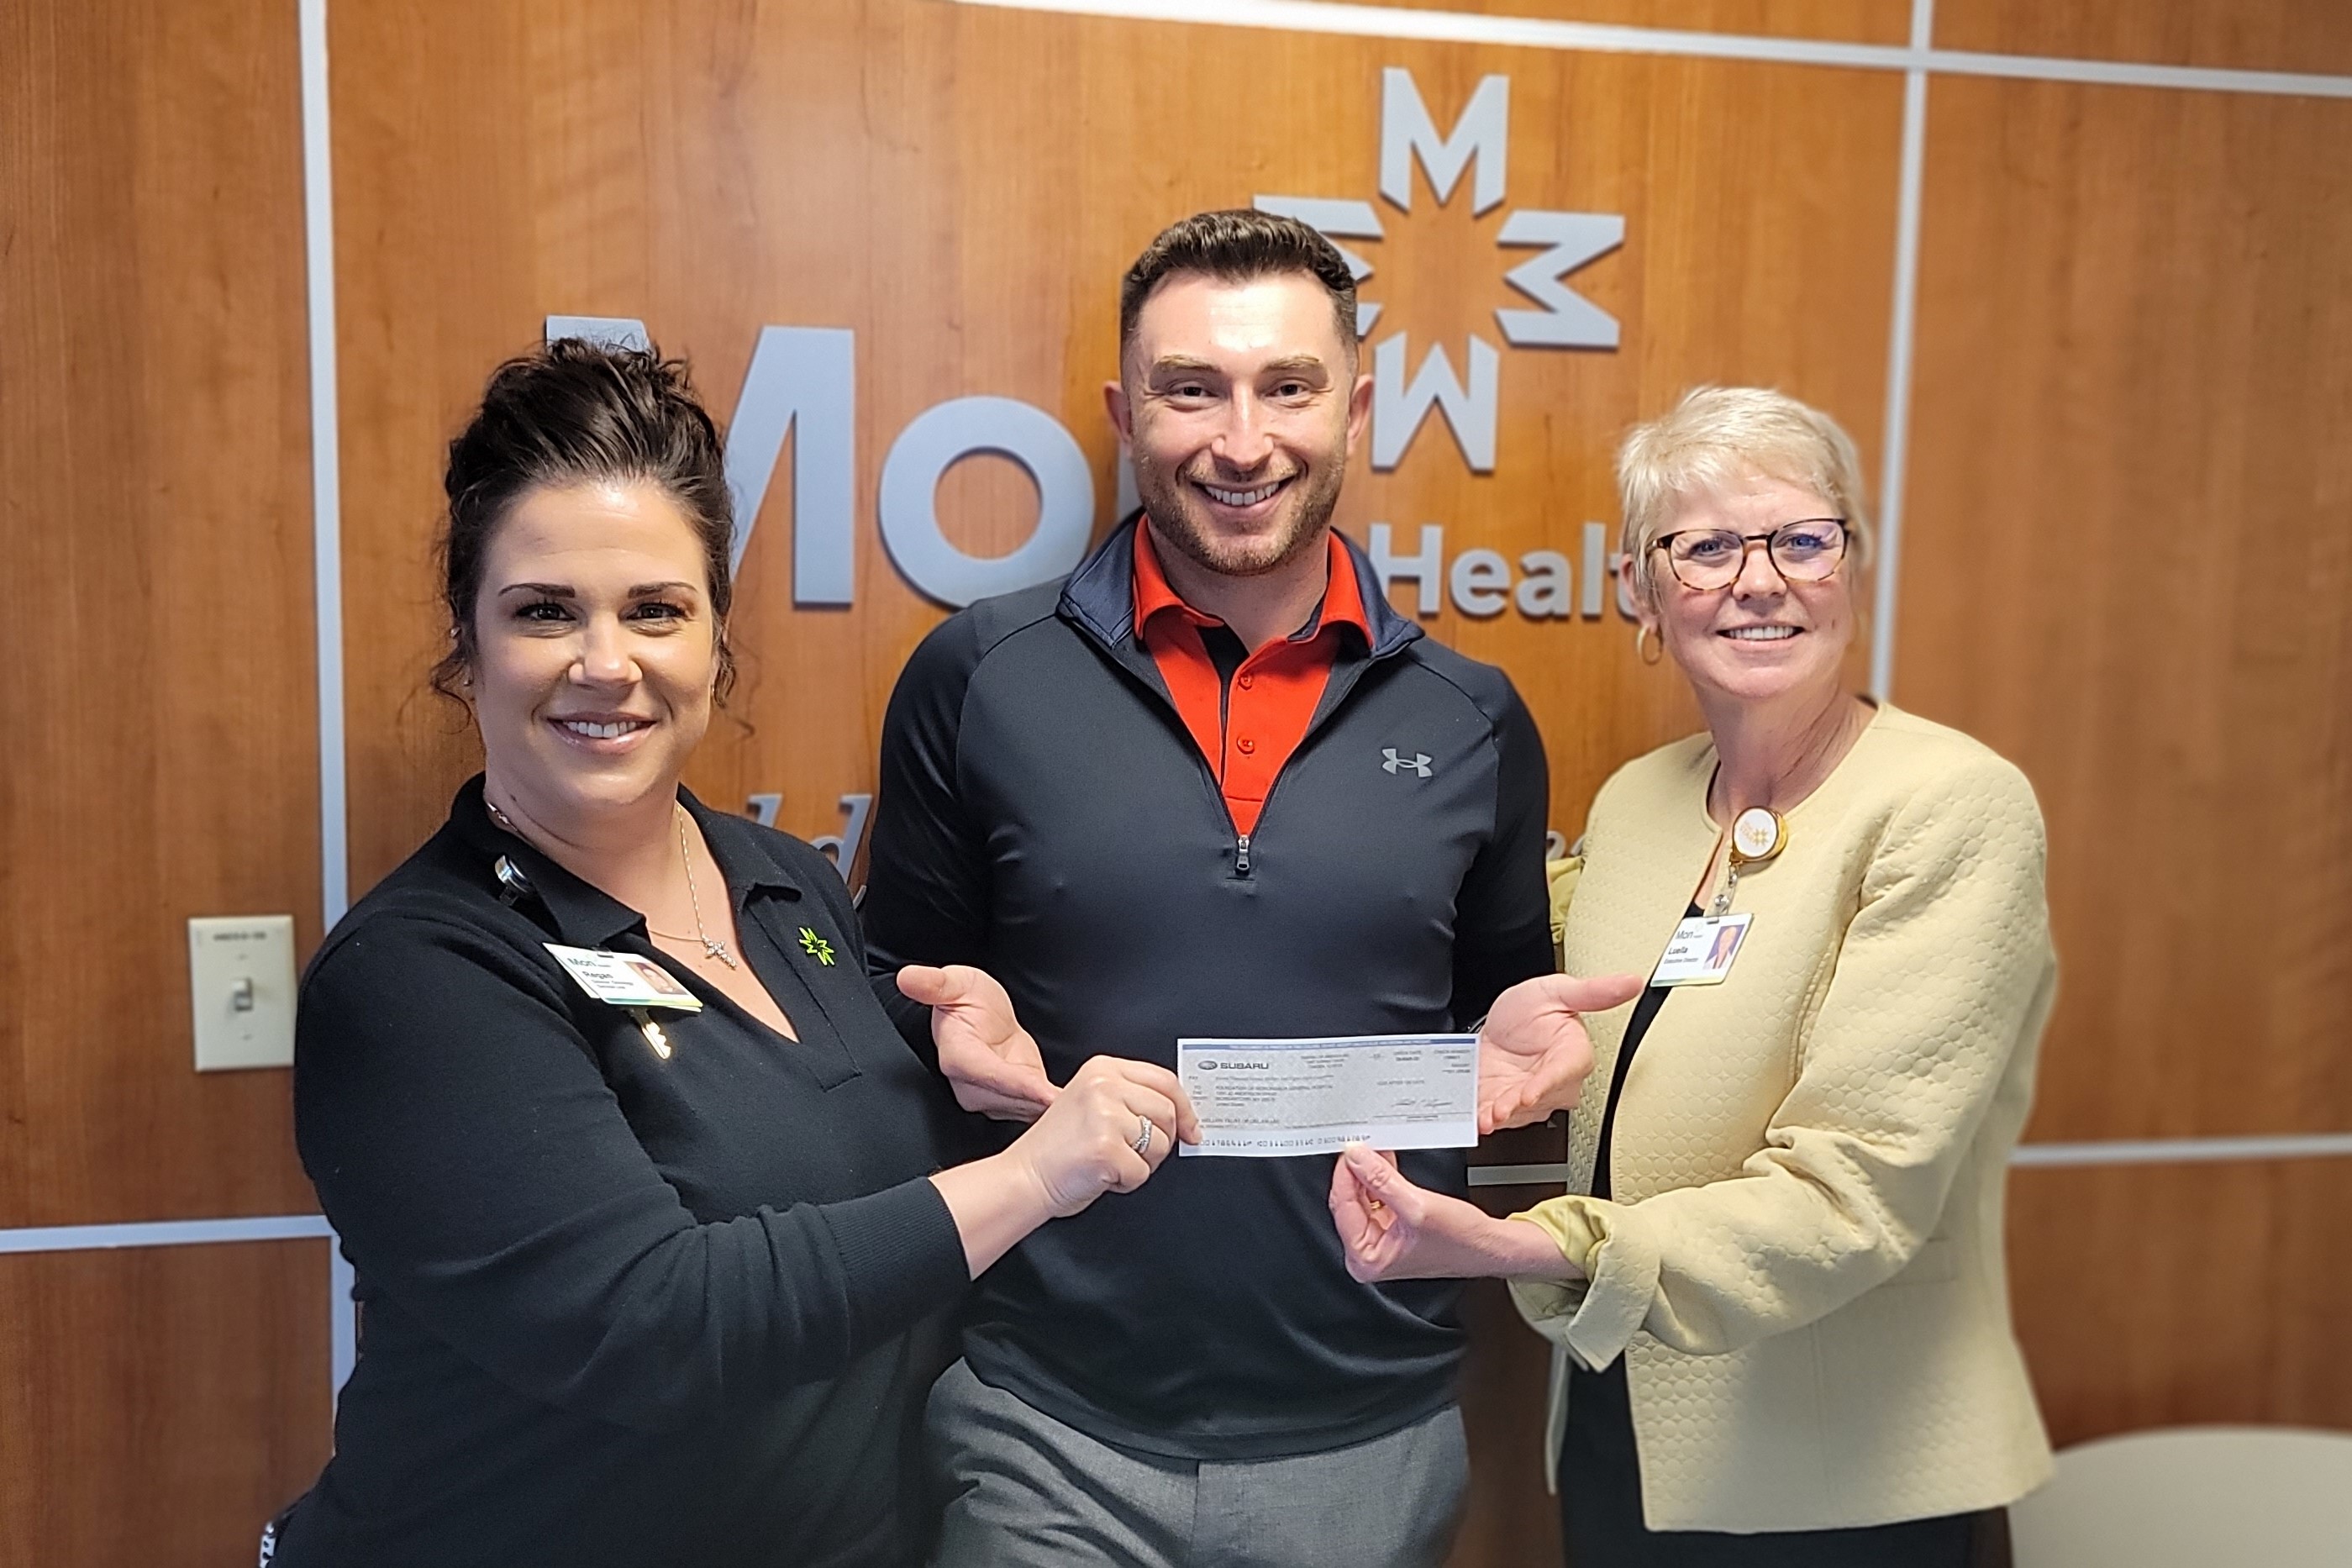 Subaru of Morgantown Donates $11,100 for Mon Health Cancer Center Patients